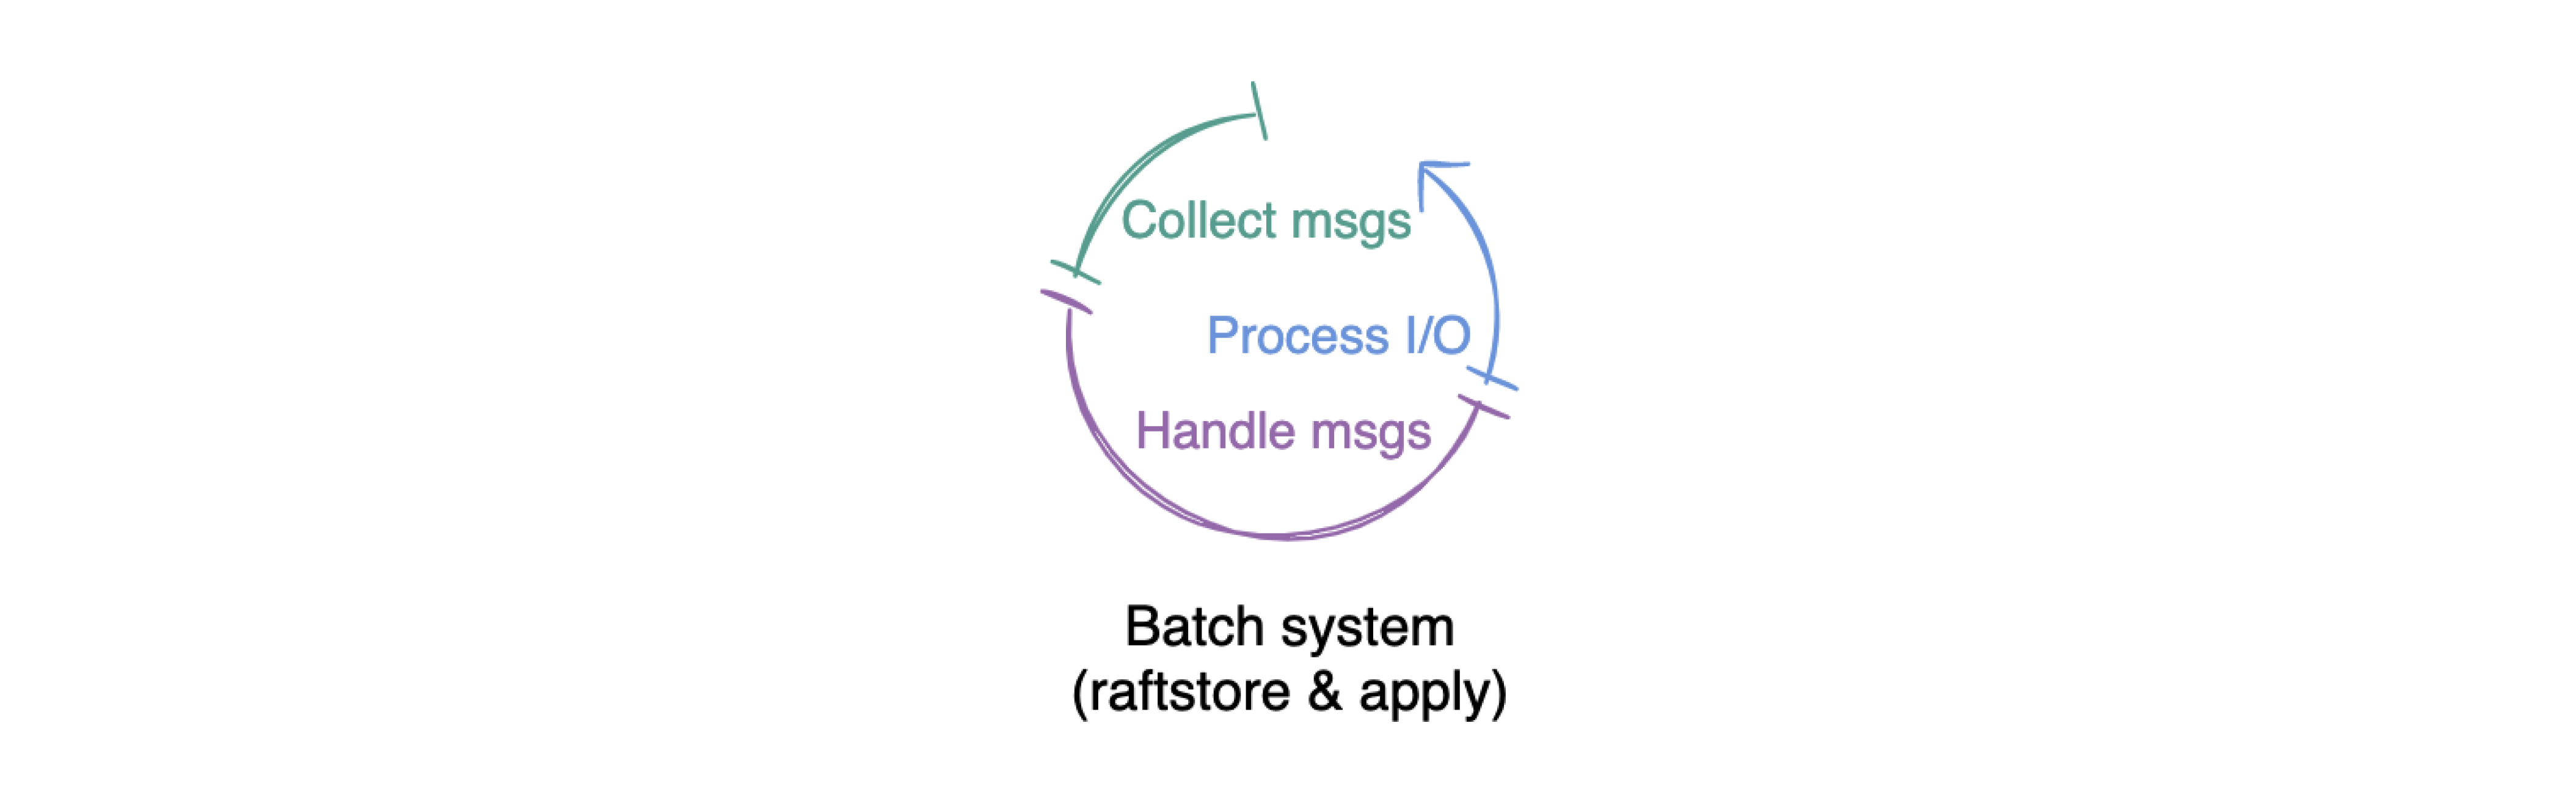 Batch system work pattern